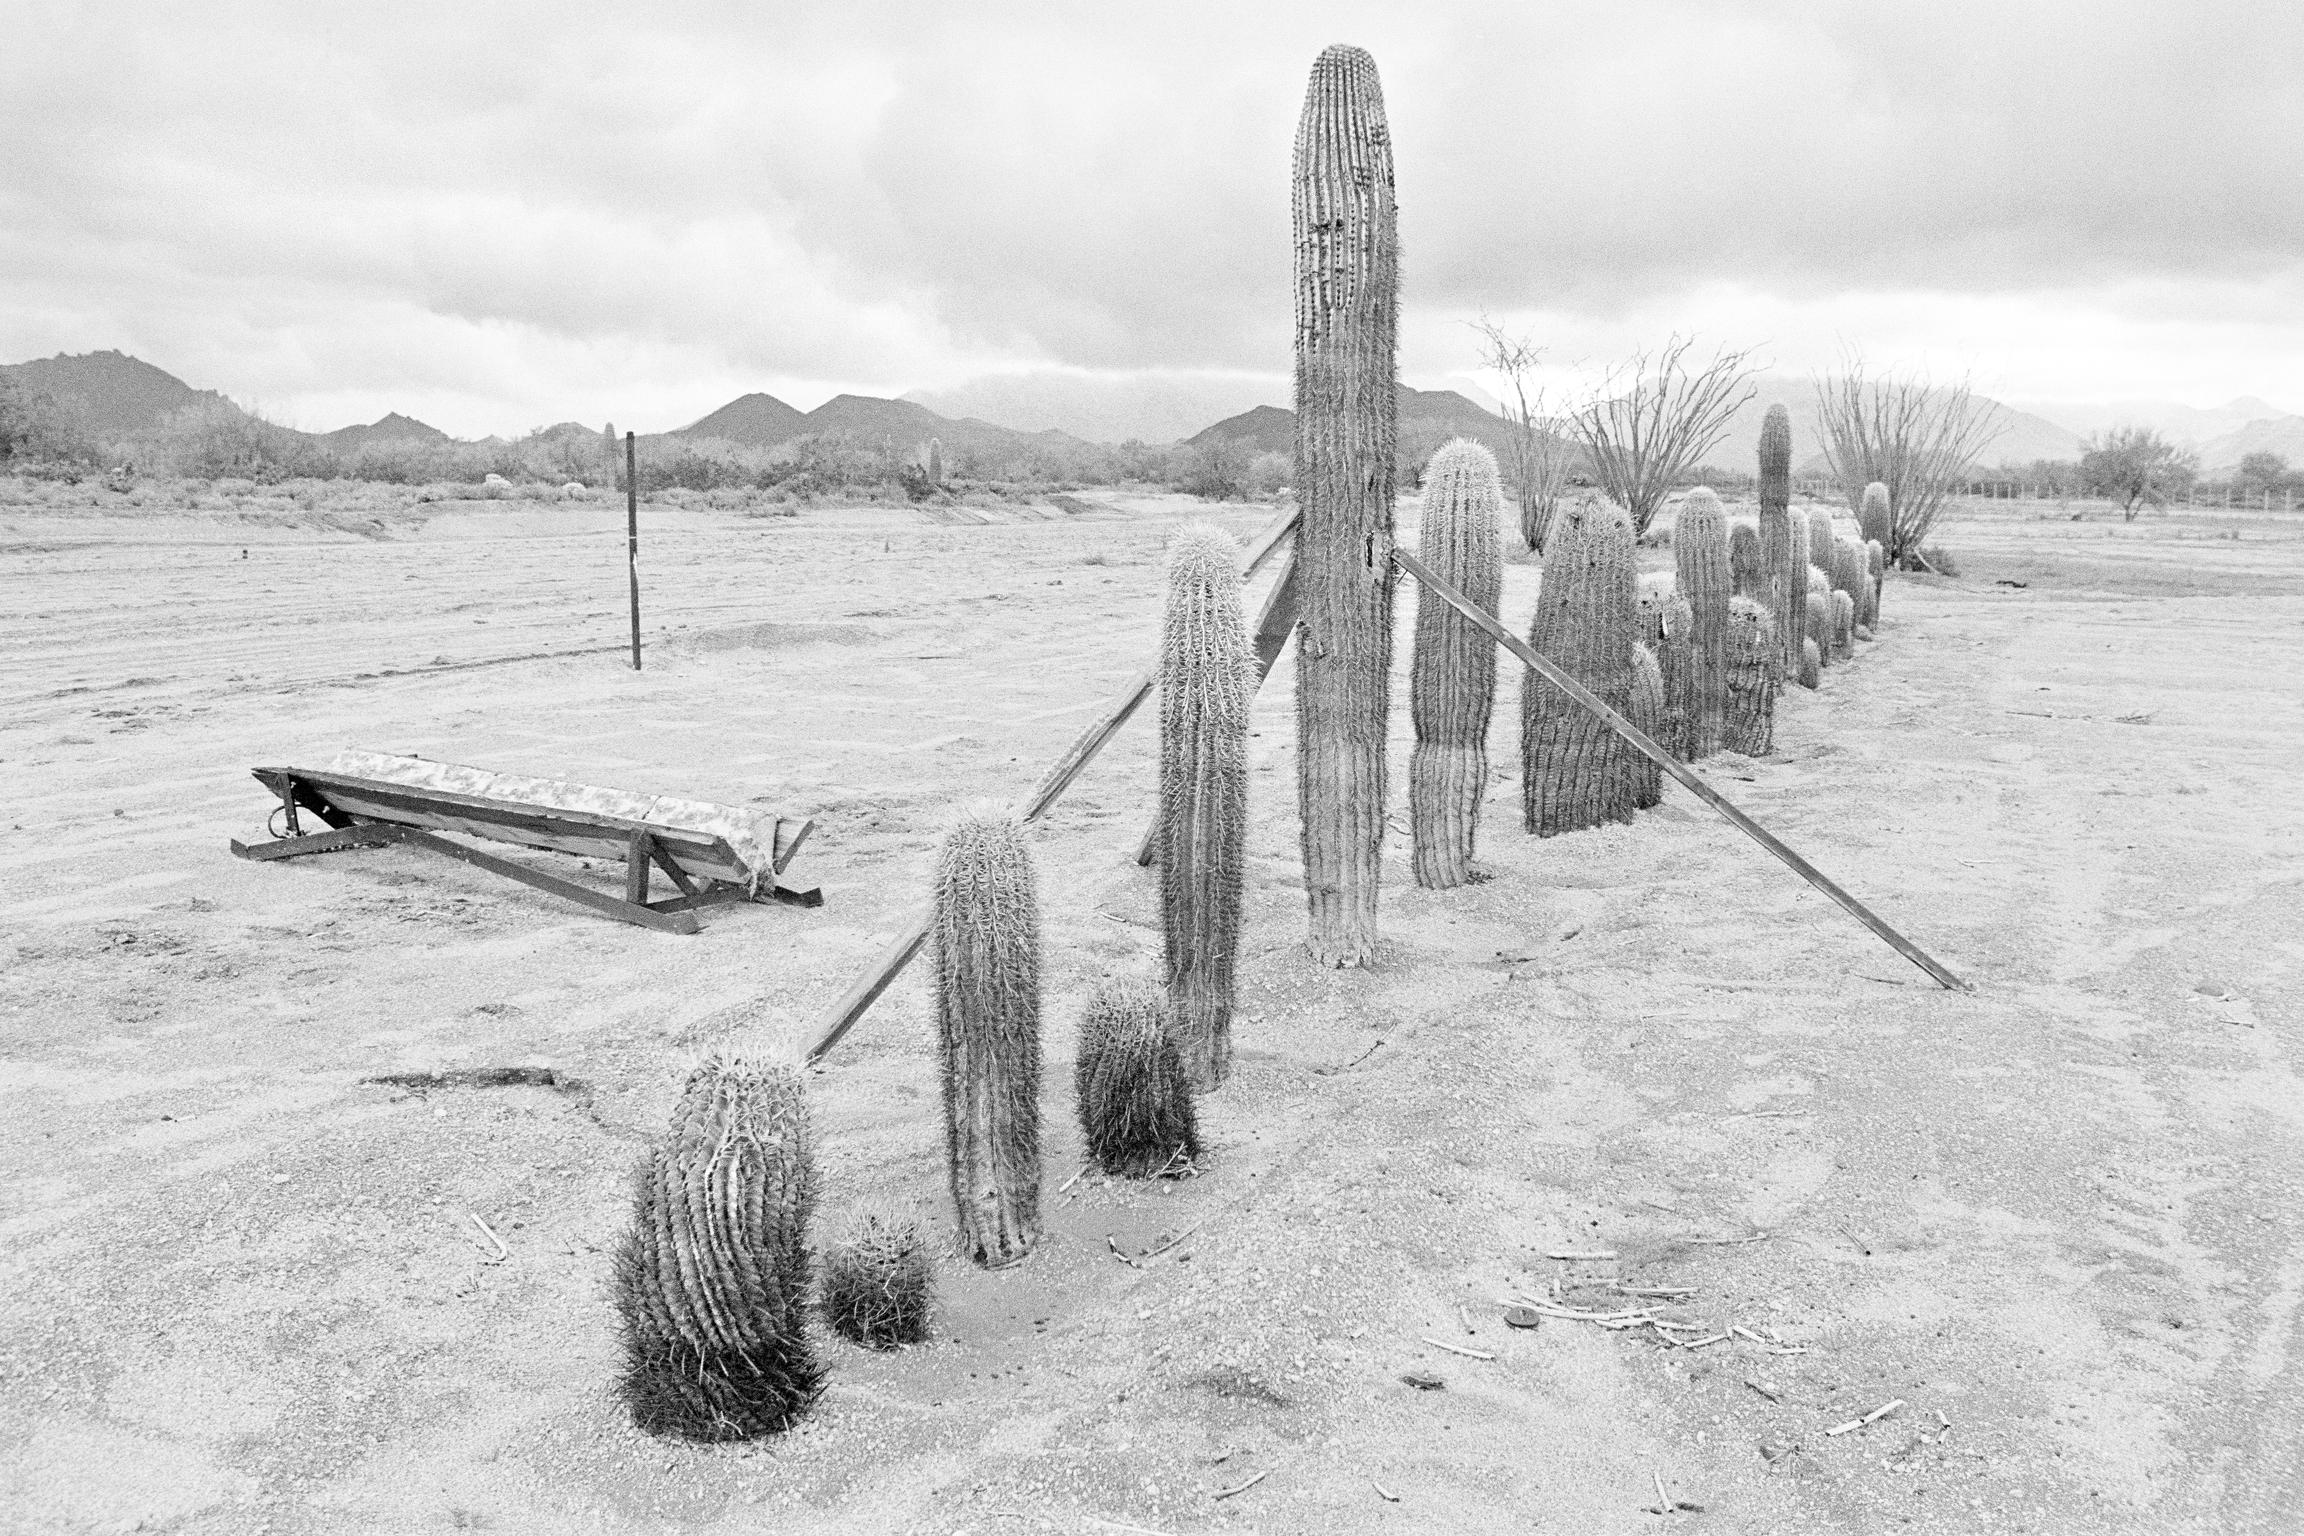 Rawhide. Protecting cactus. Arizona USA